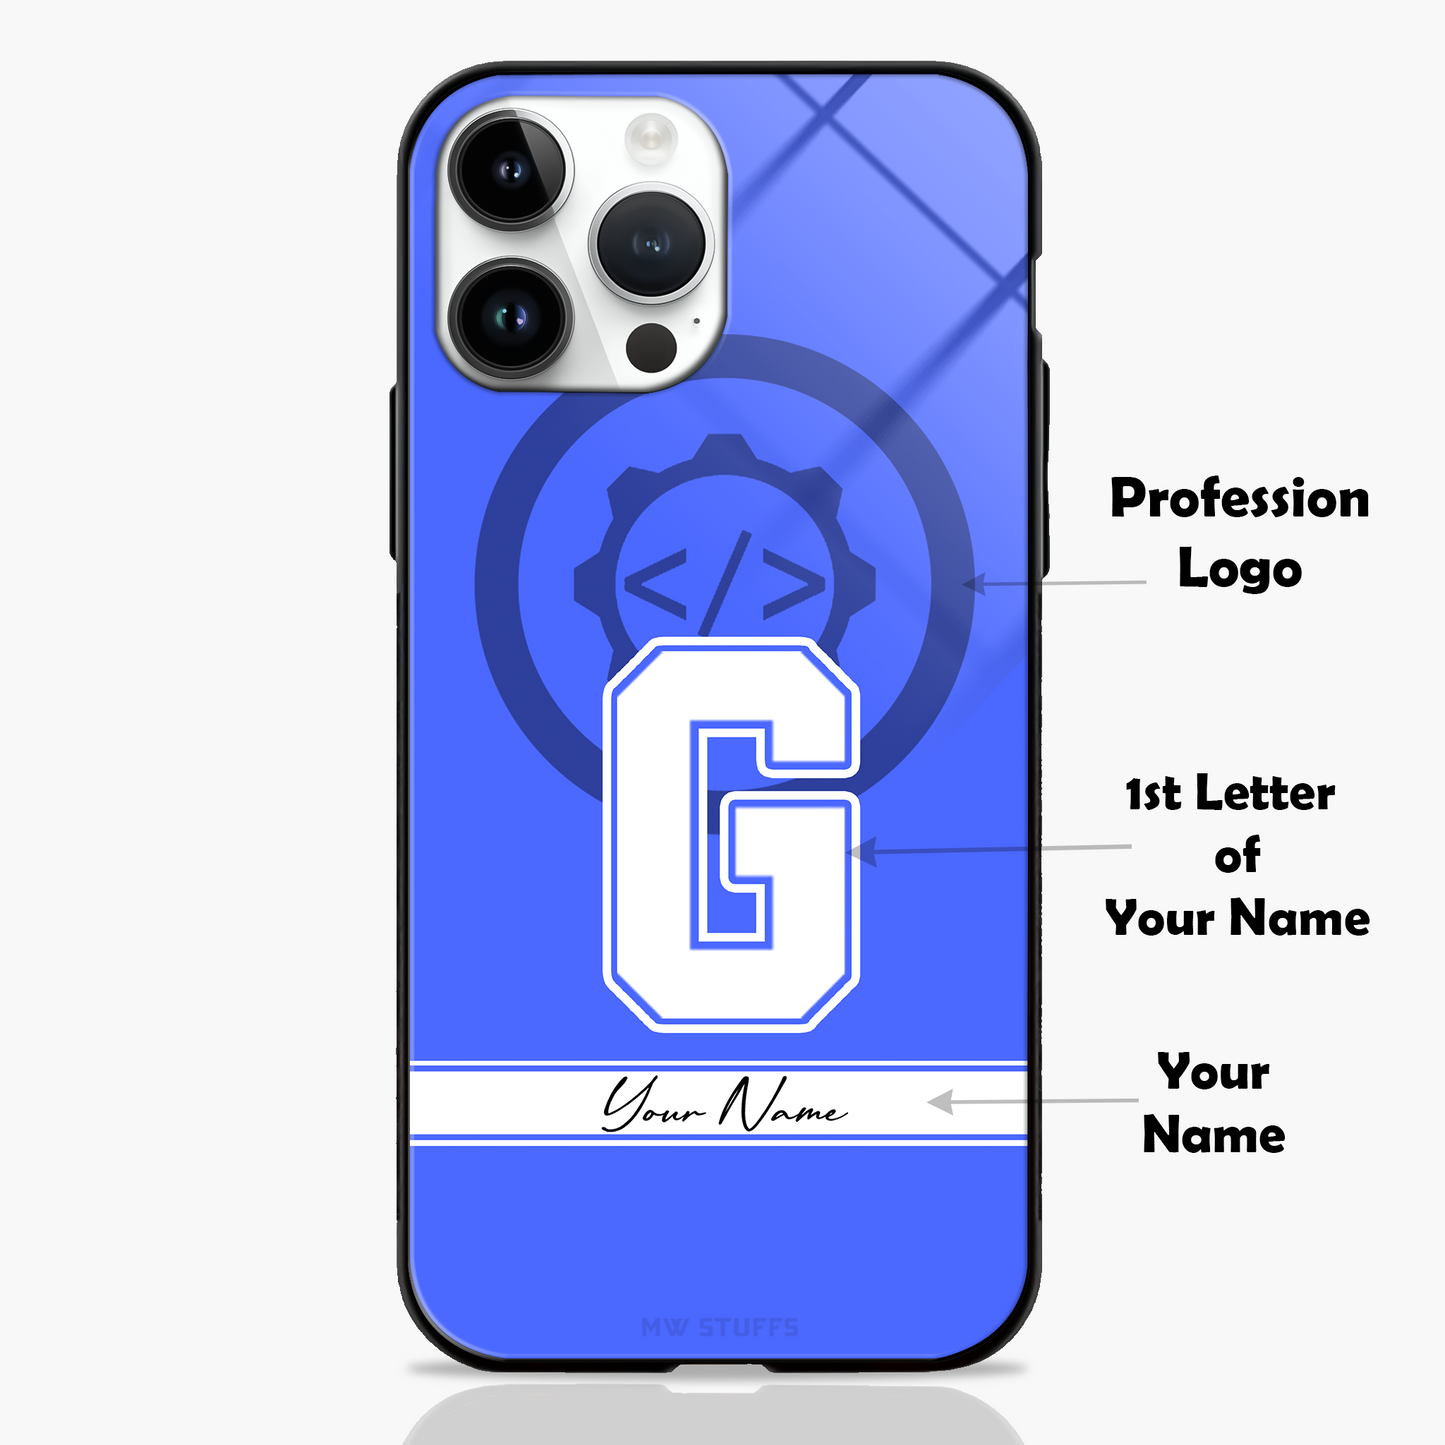 Custom Name & Profession Logo Glass Case